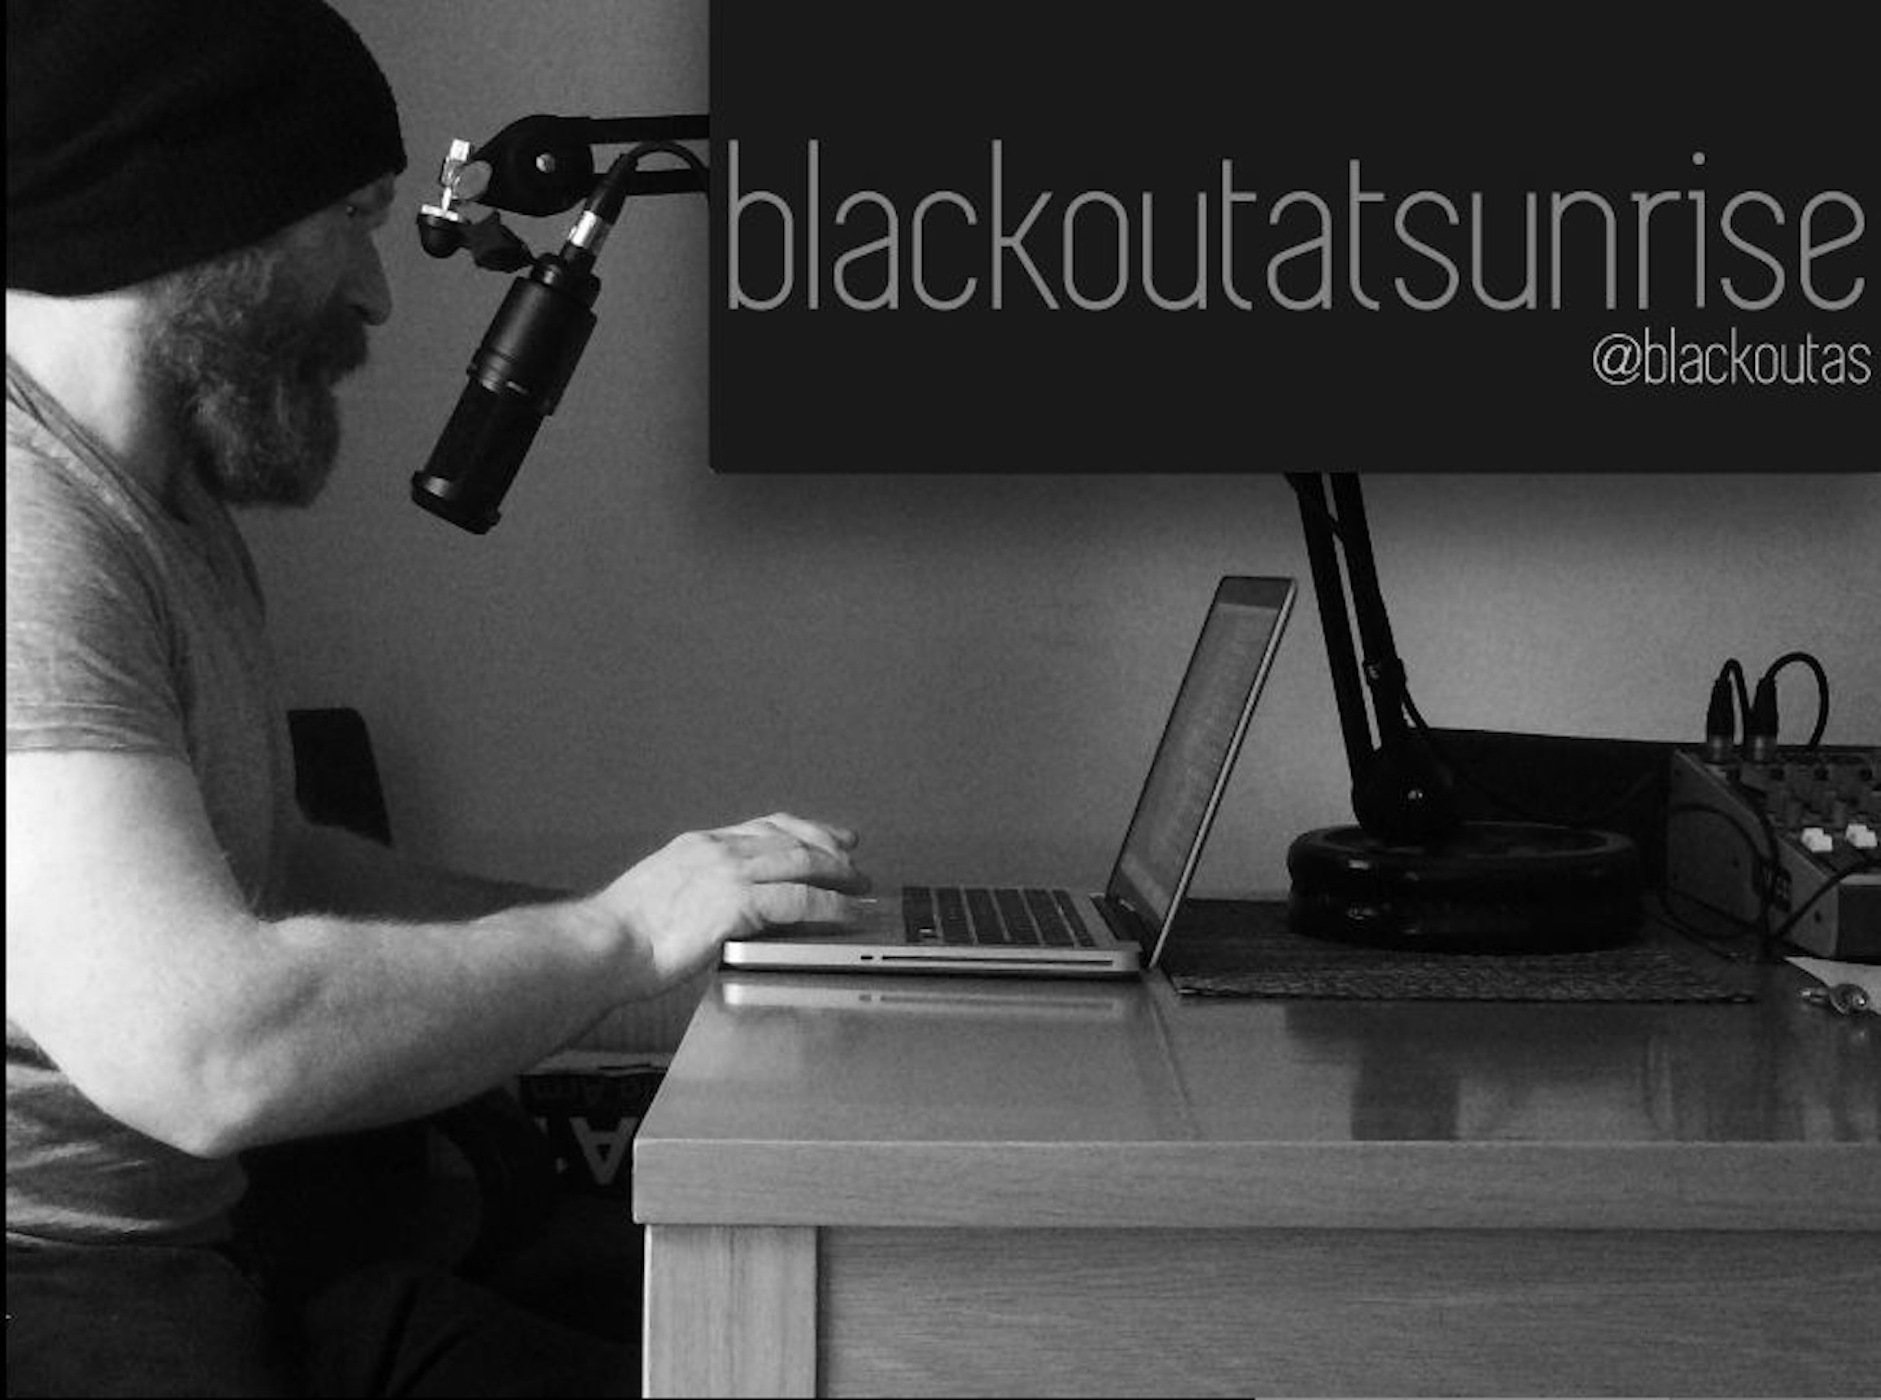 BlackoutAtSunrise Media